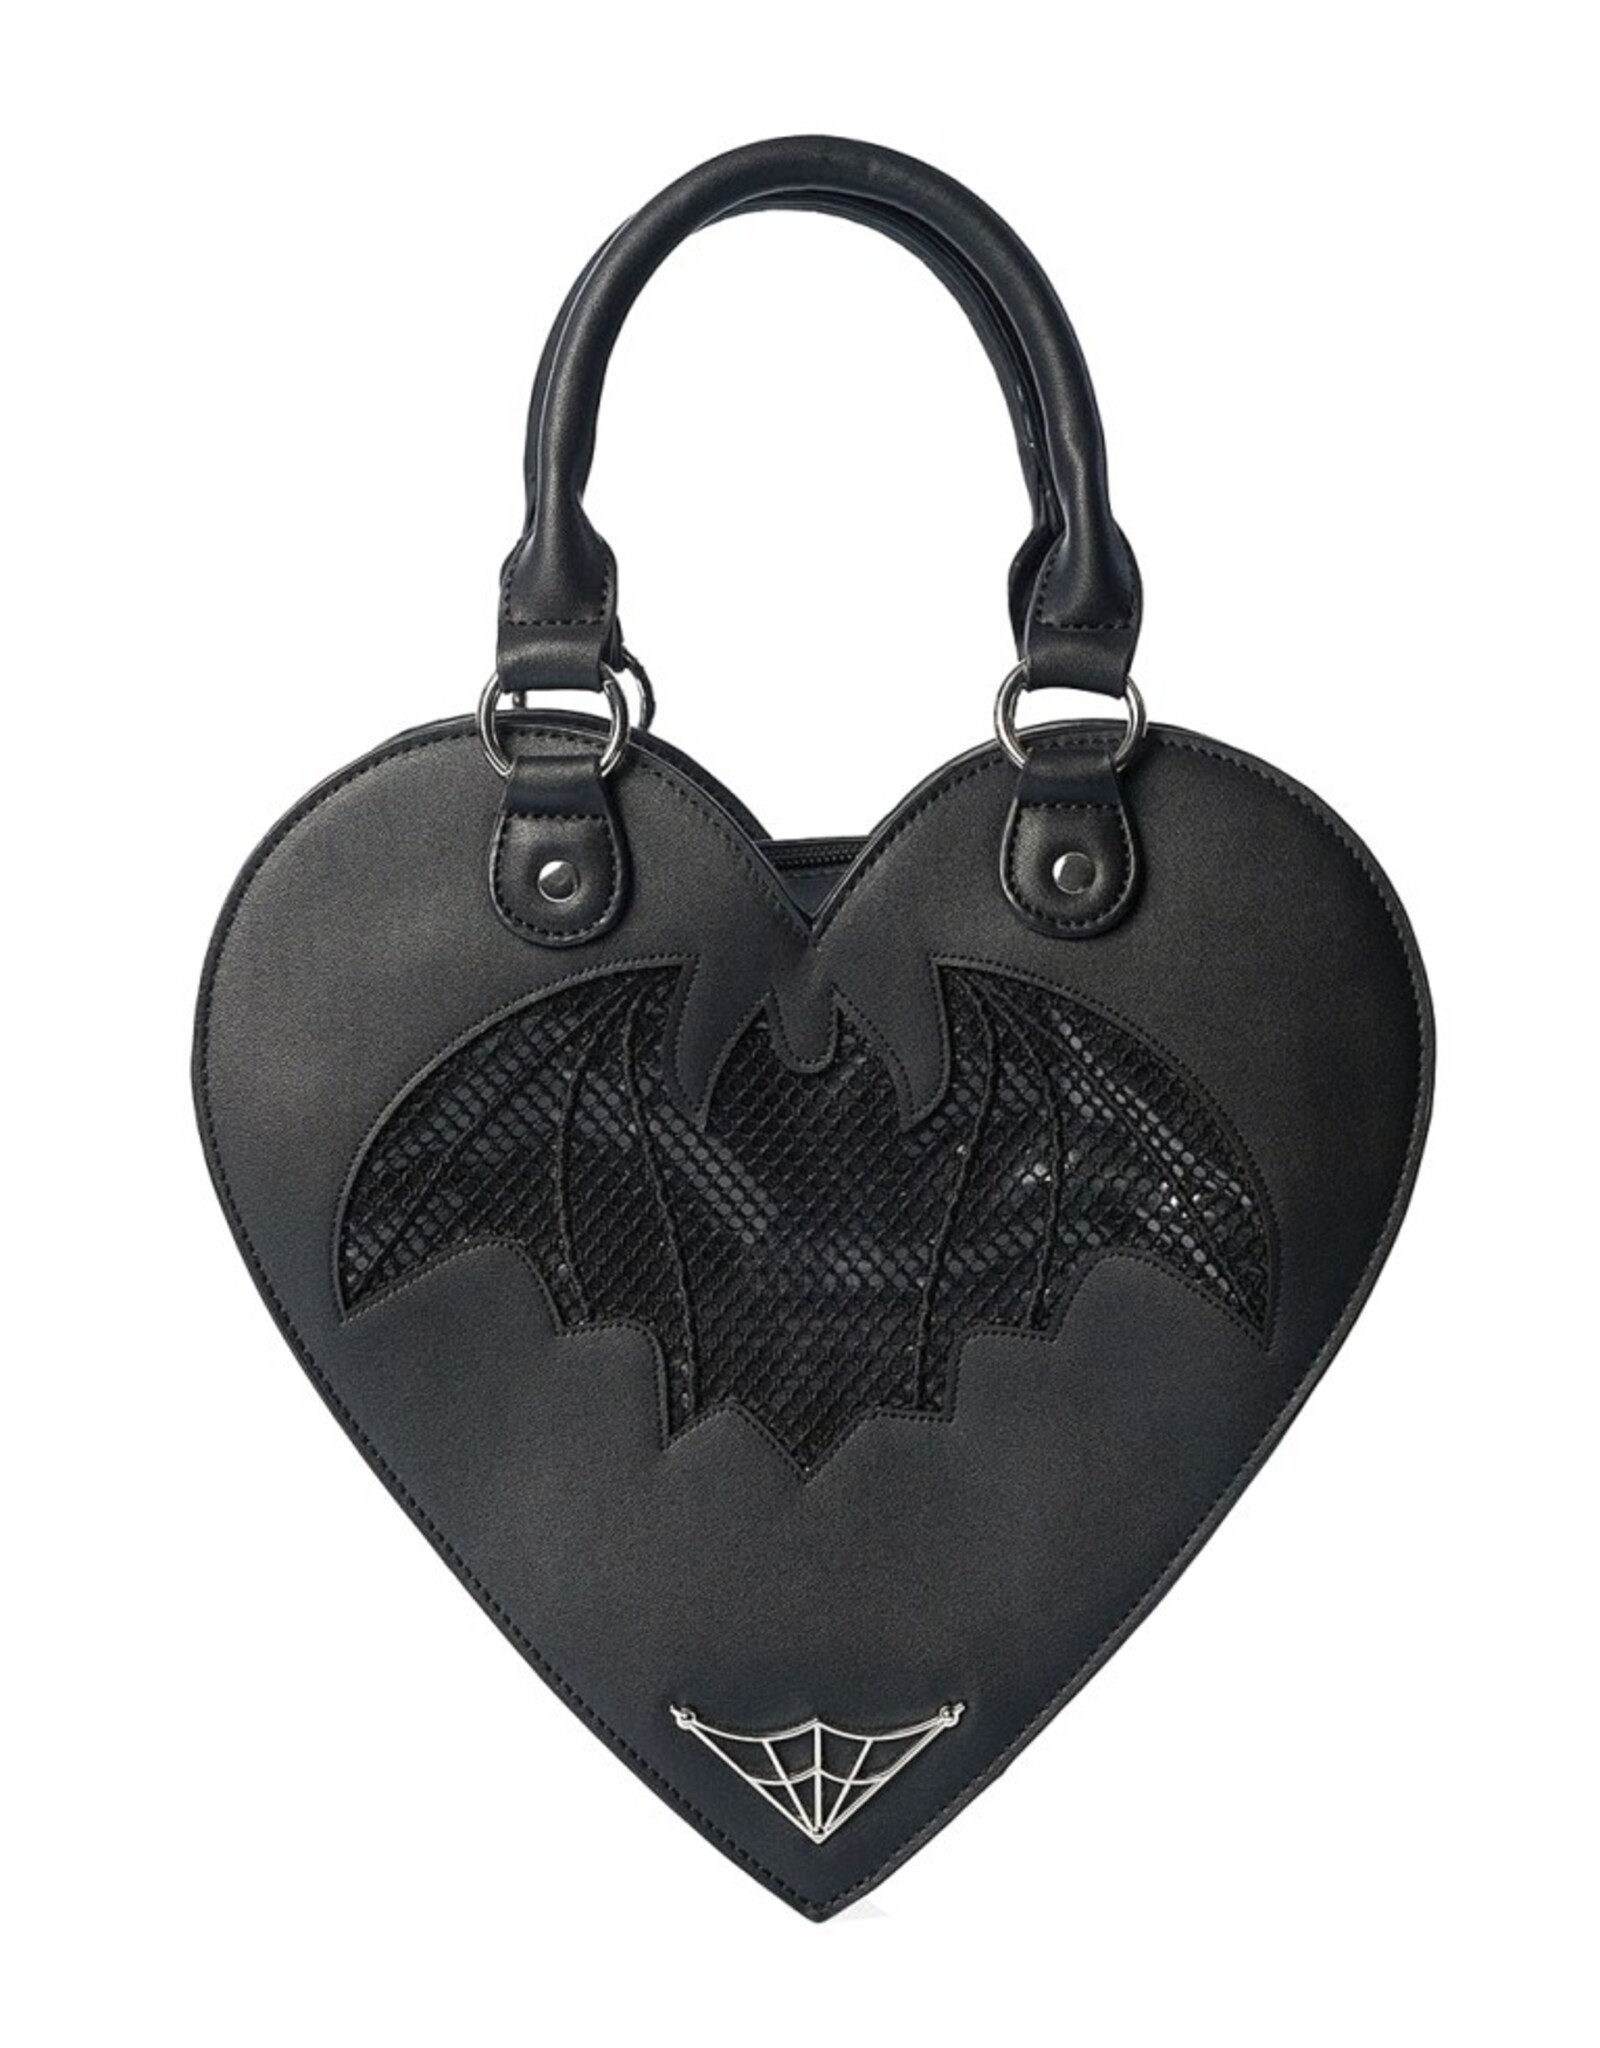 Banned Gothic bags Steampunk bags - Banned Dreamology handbag Black heart